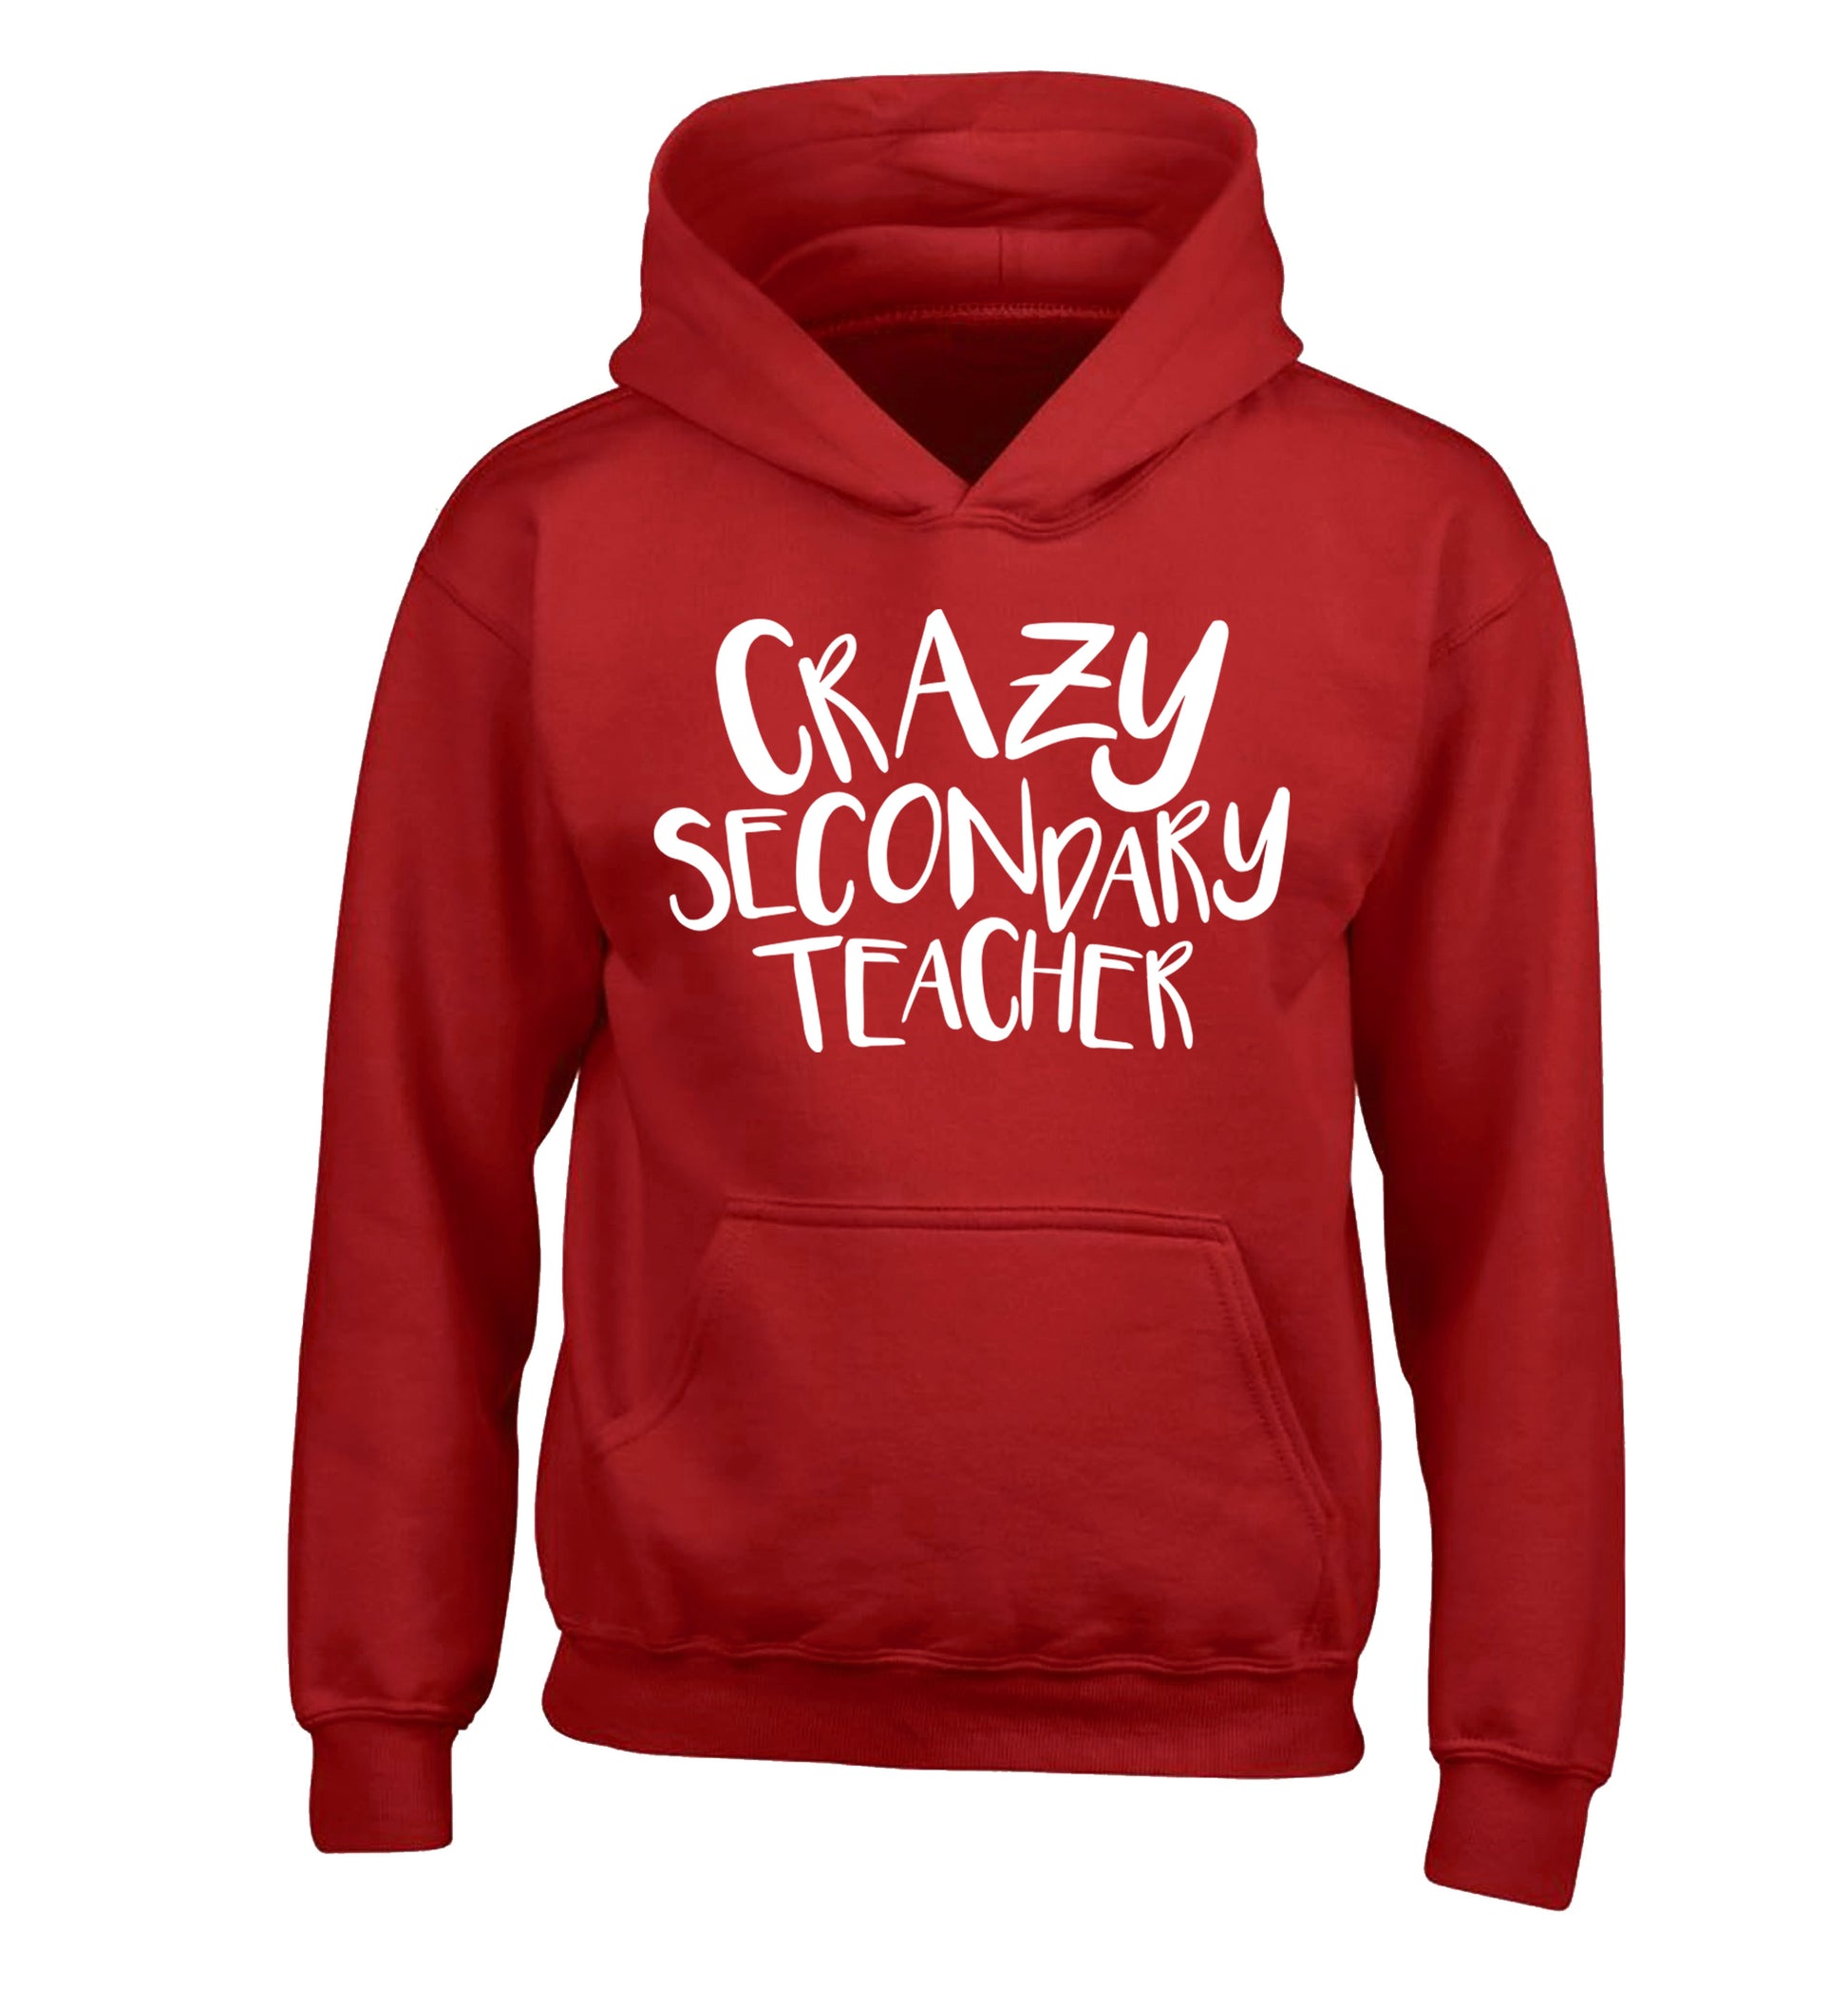 Crazy secondary teacher children's red hoodie 12-13 Years